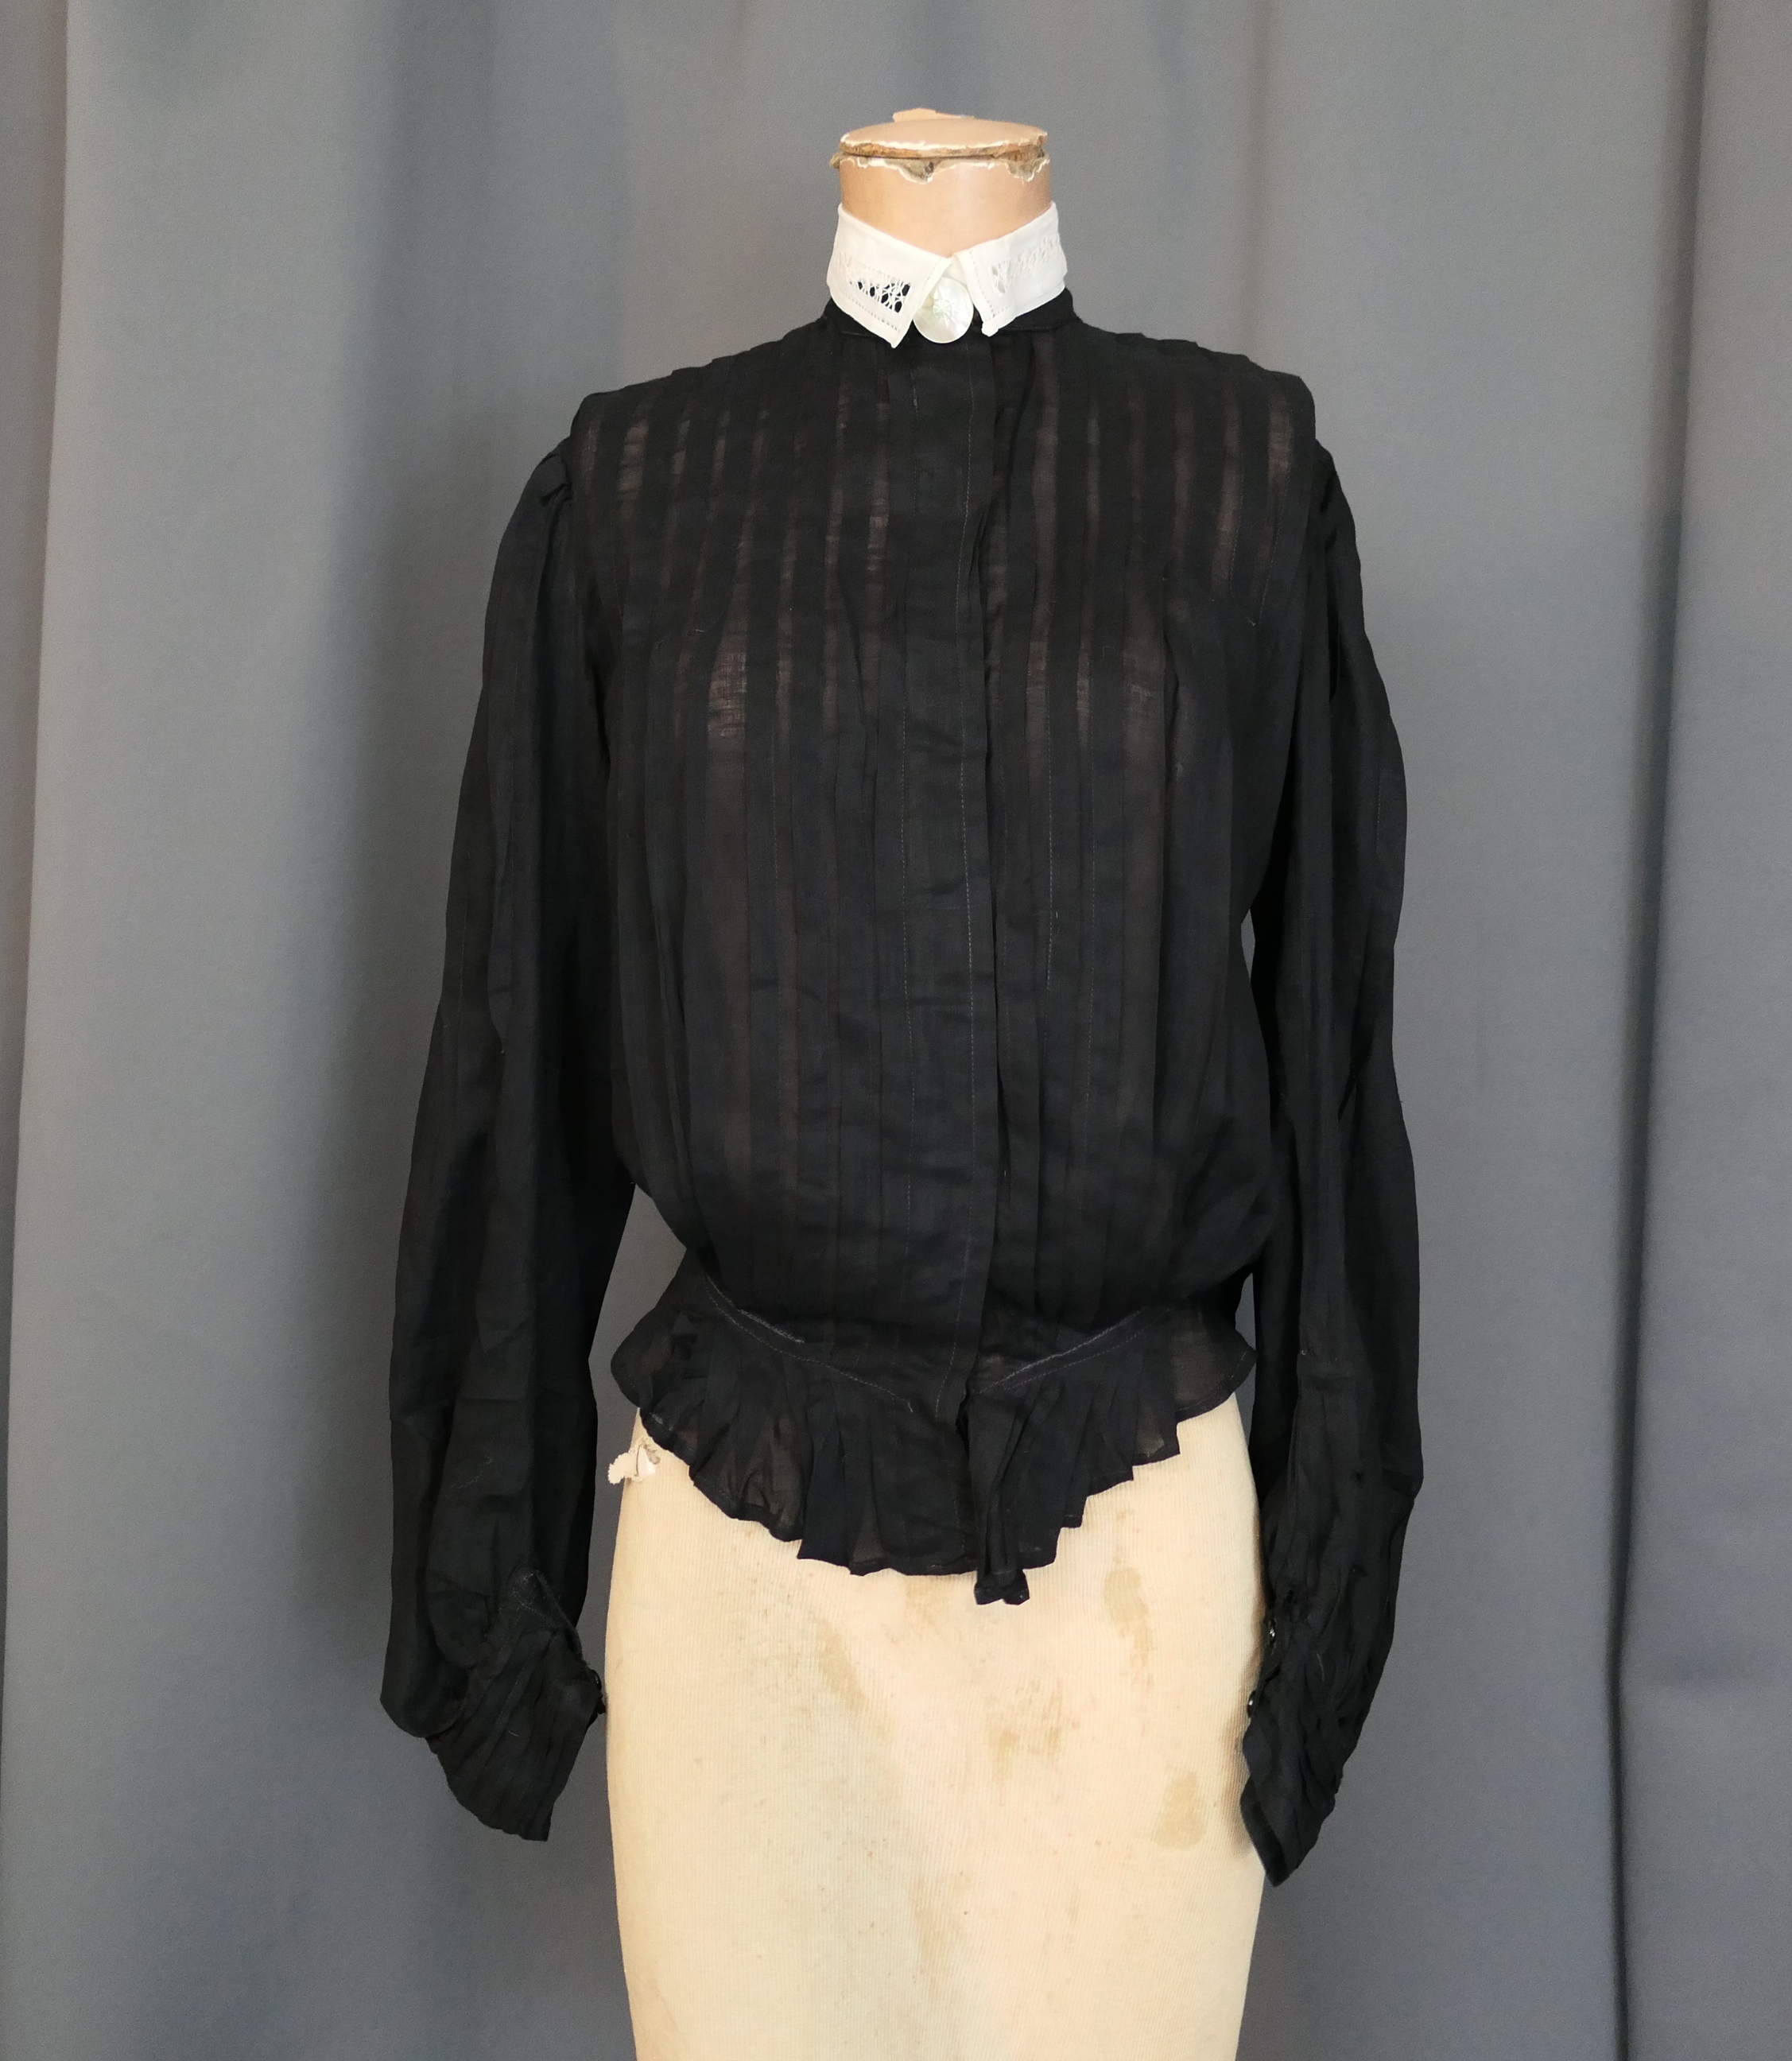 Vintage Black Cotton Blouse Edwardian 1900s, with White Collar